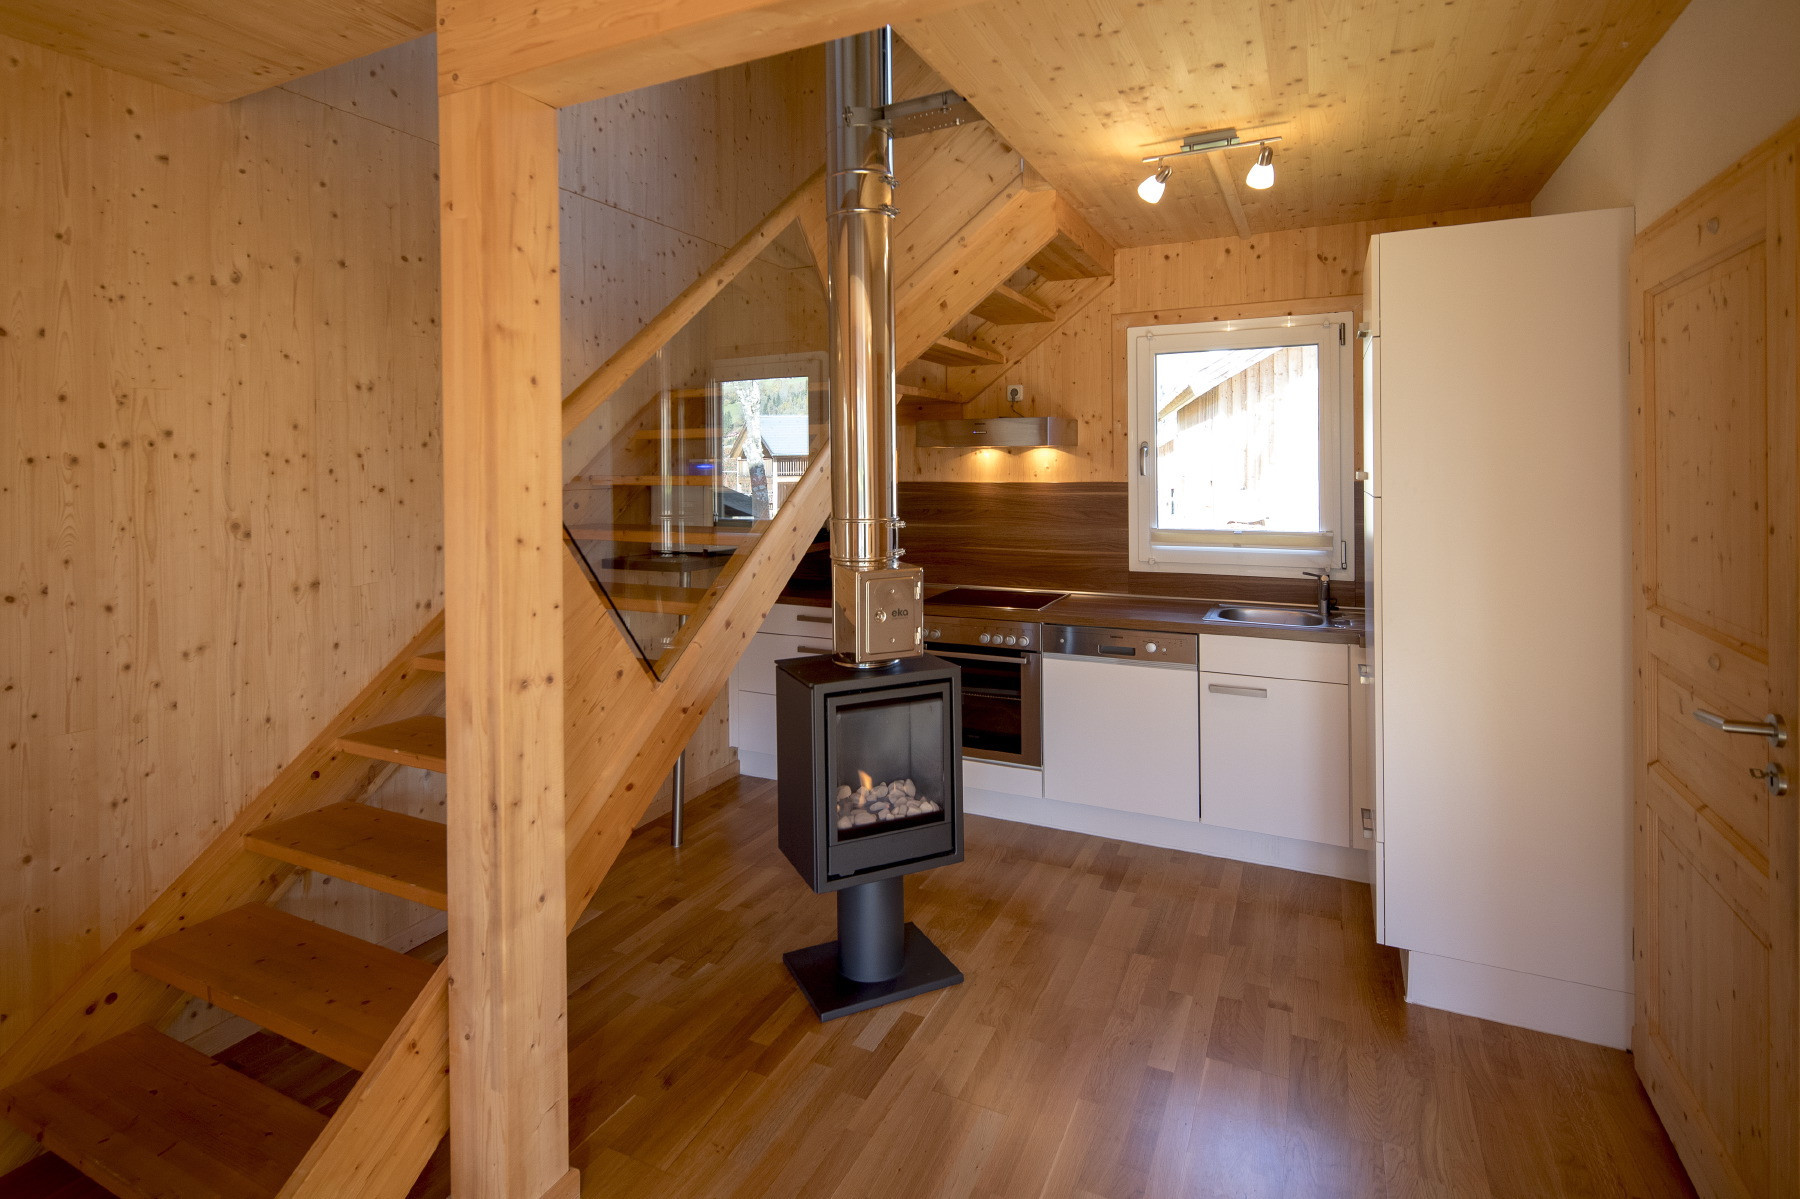  in St. Georgen am Kreischberg - Chalet # 9 with 2 bedrooms & IR sauna